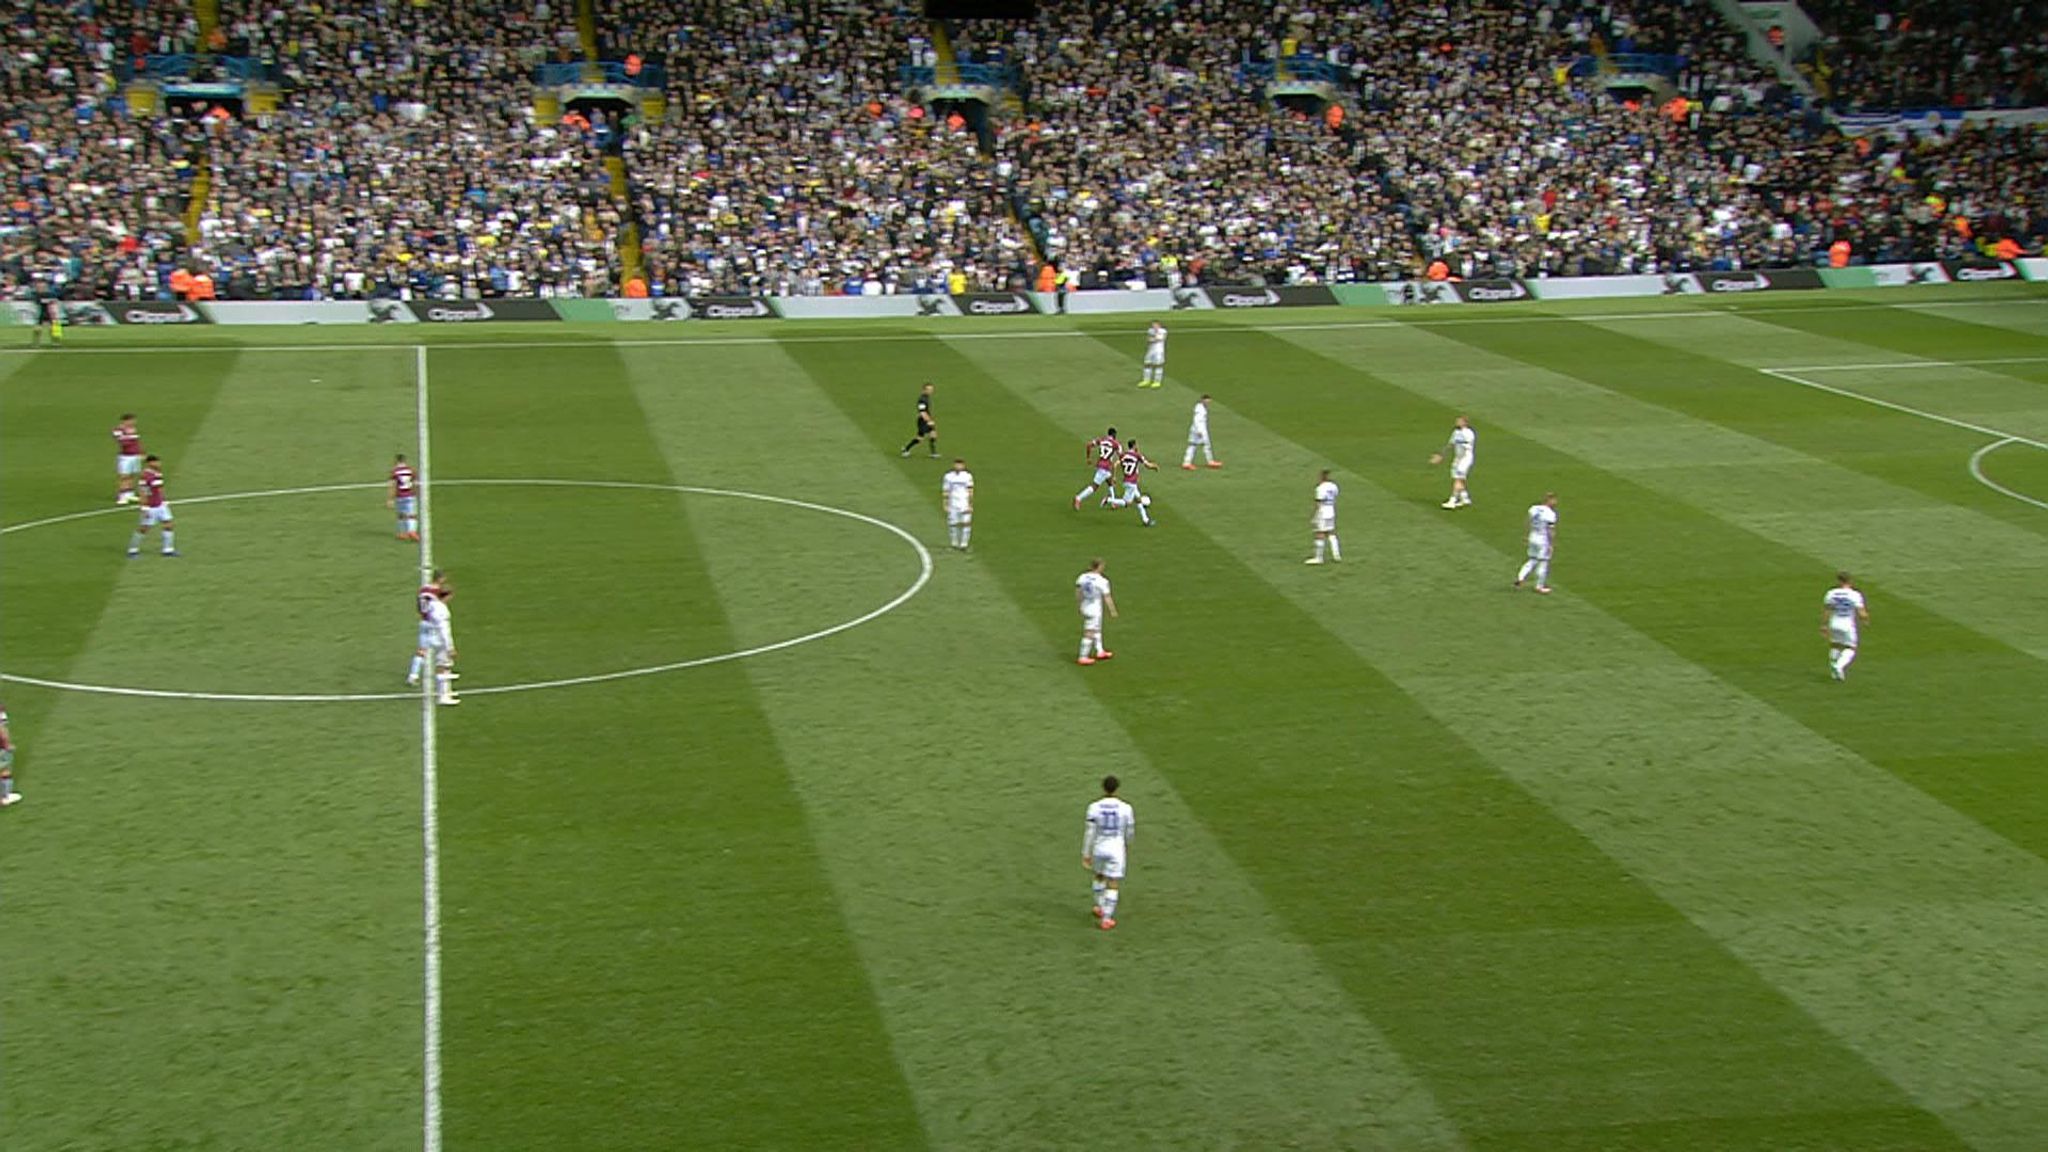 Leeds United let Aston Villa score after bizarre minute UK News Sky News